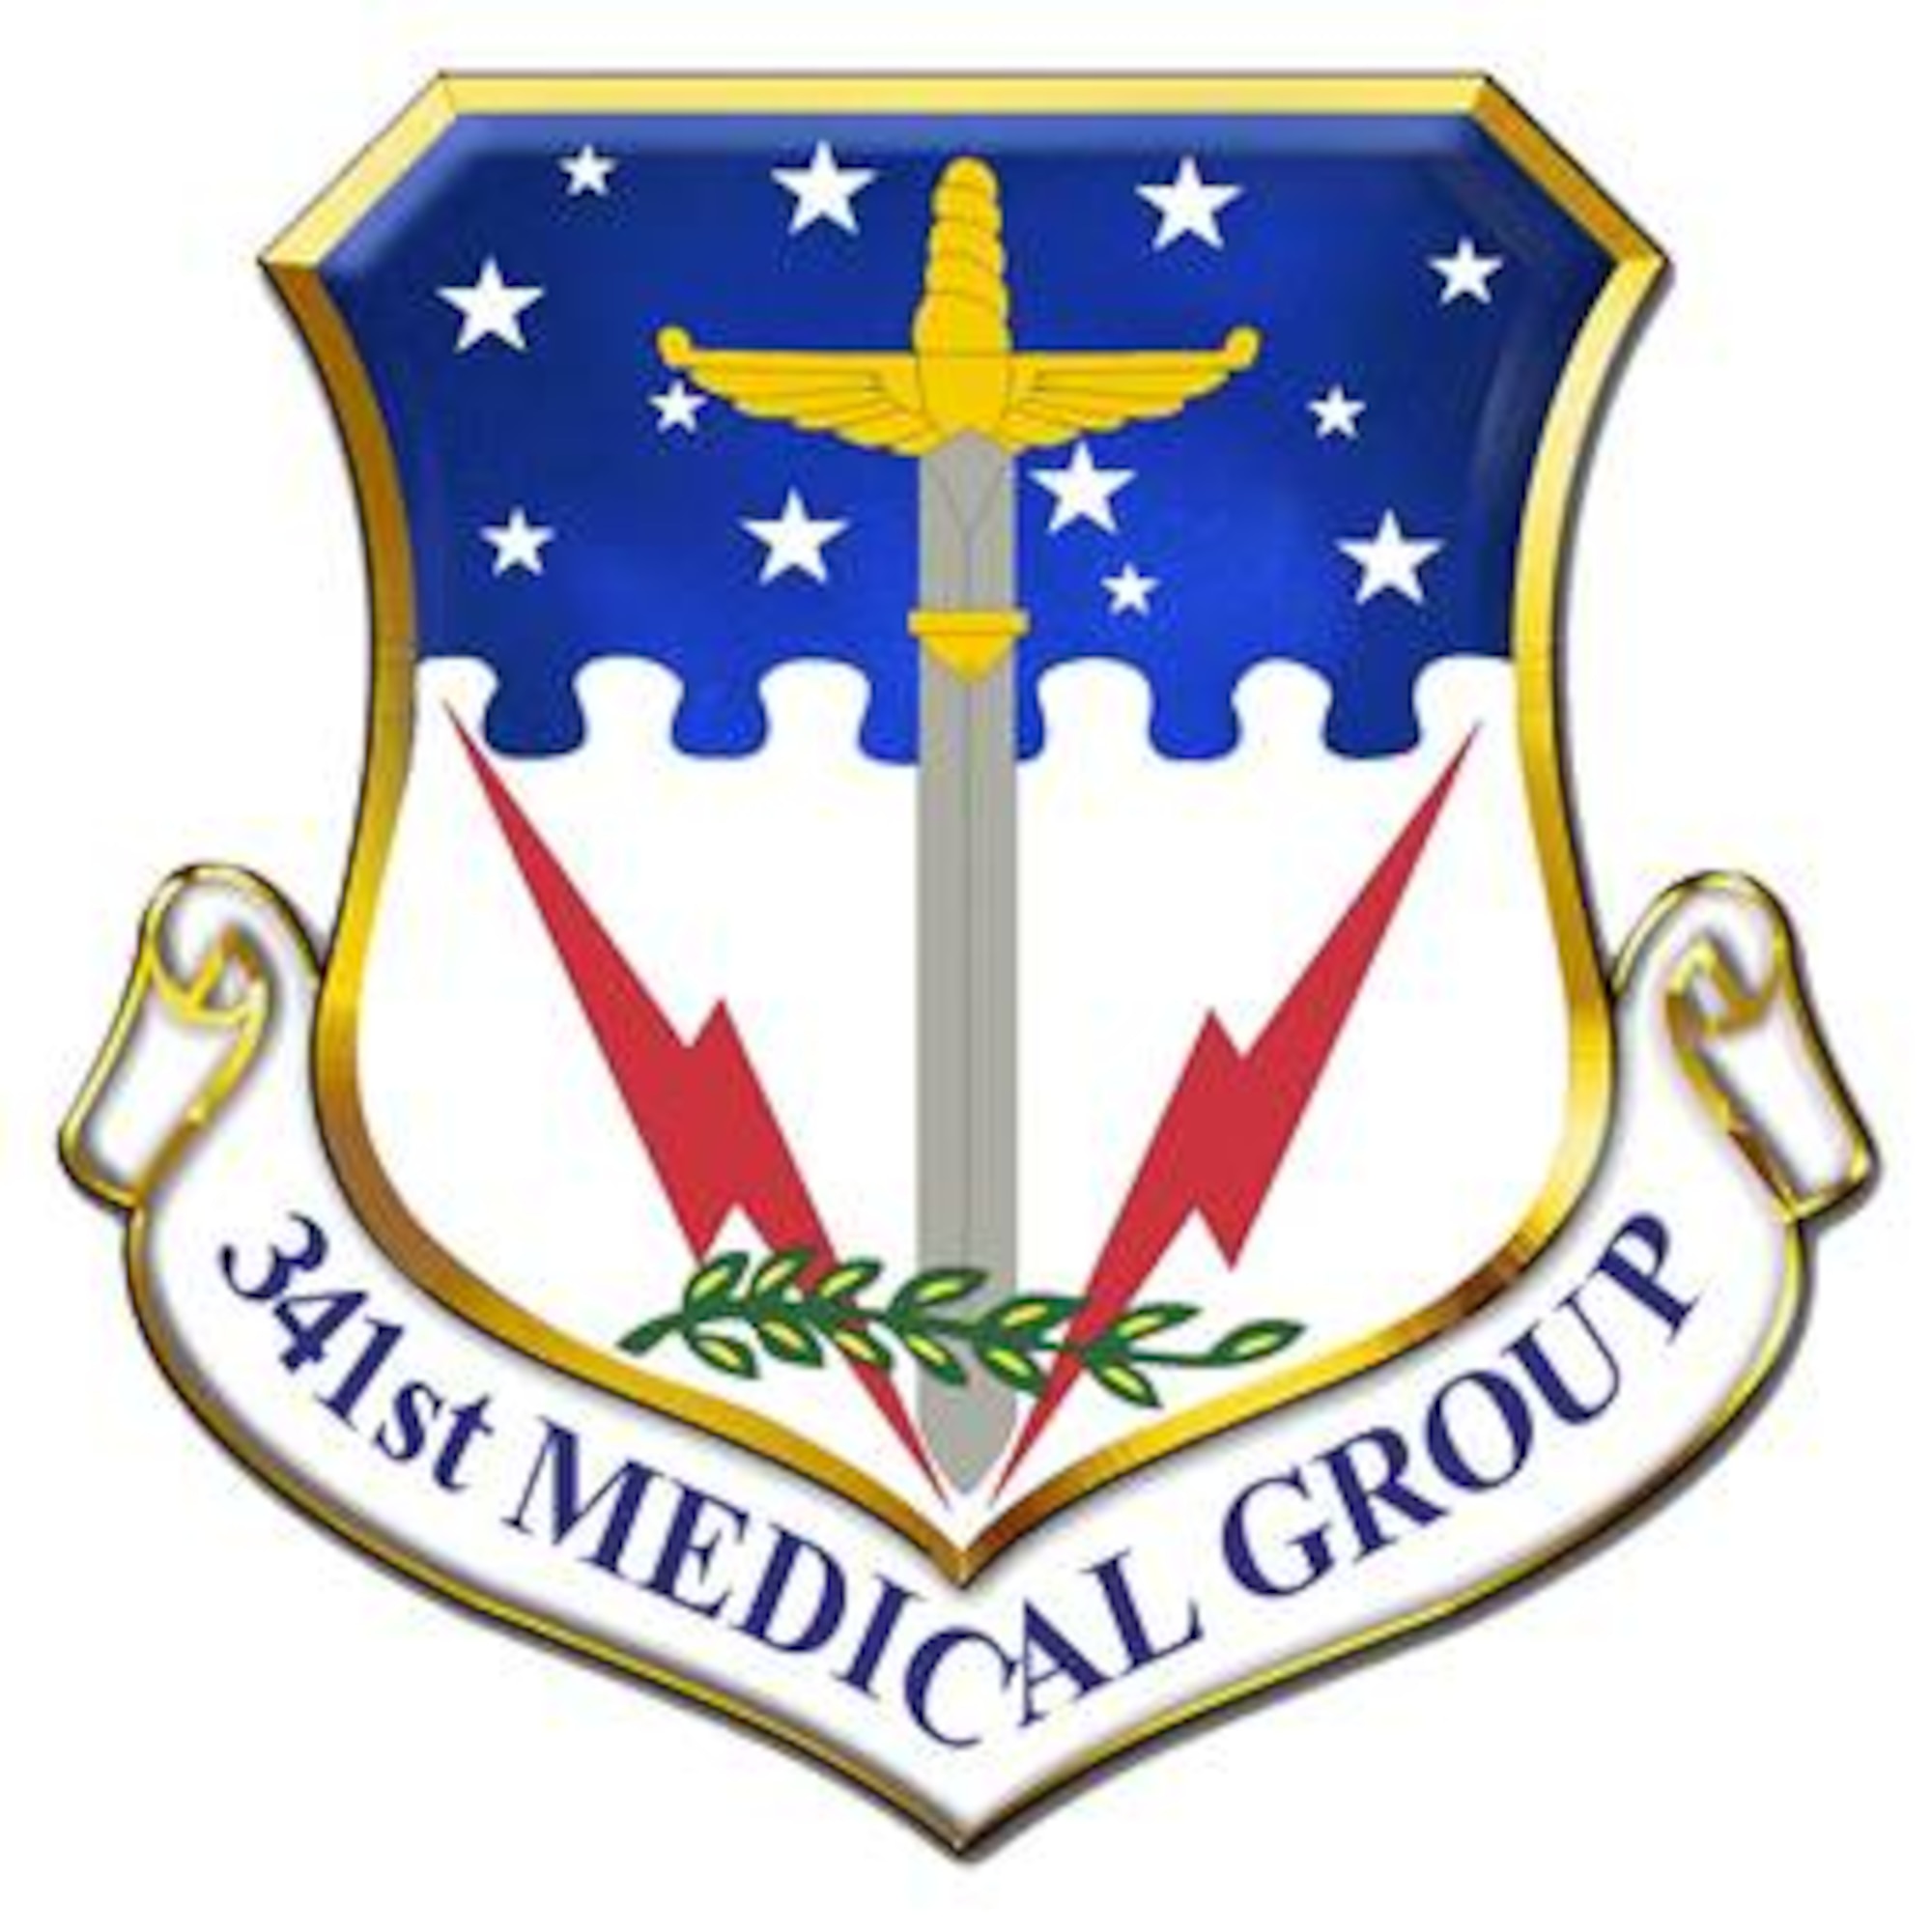 341st Medical Group shield